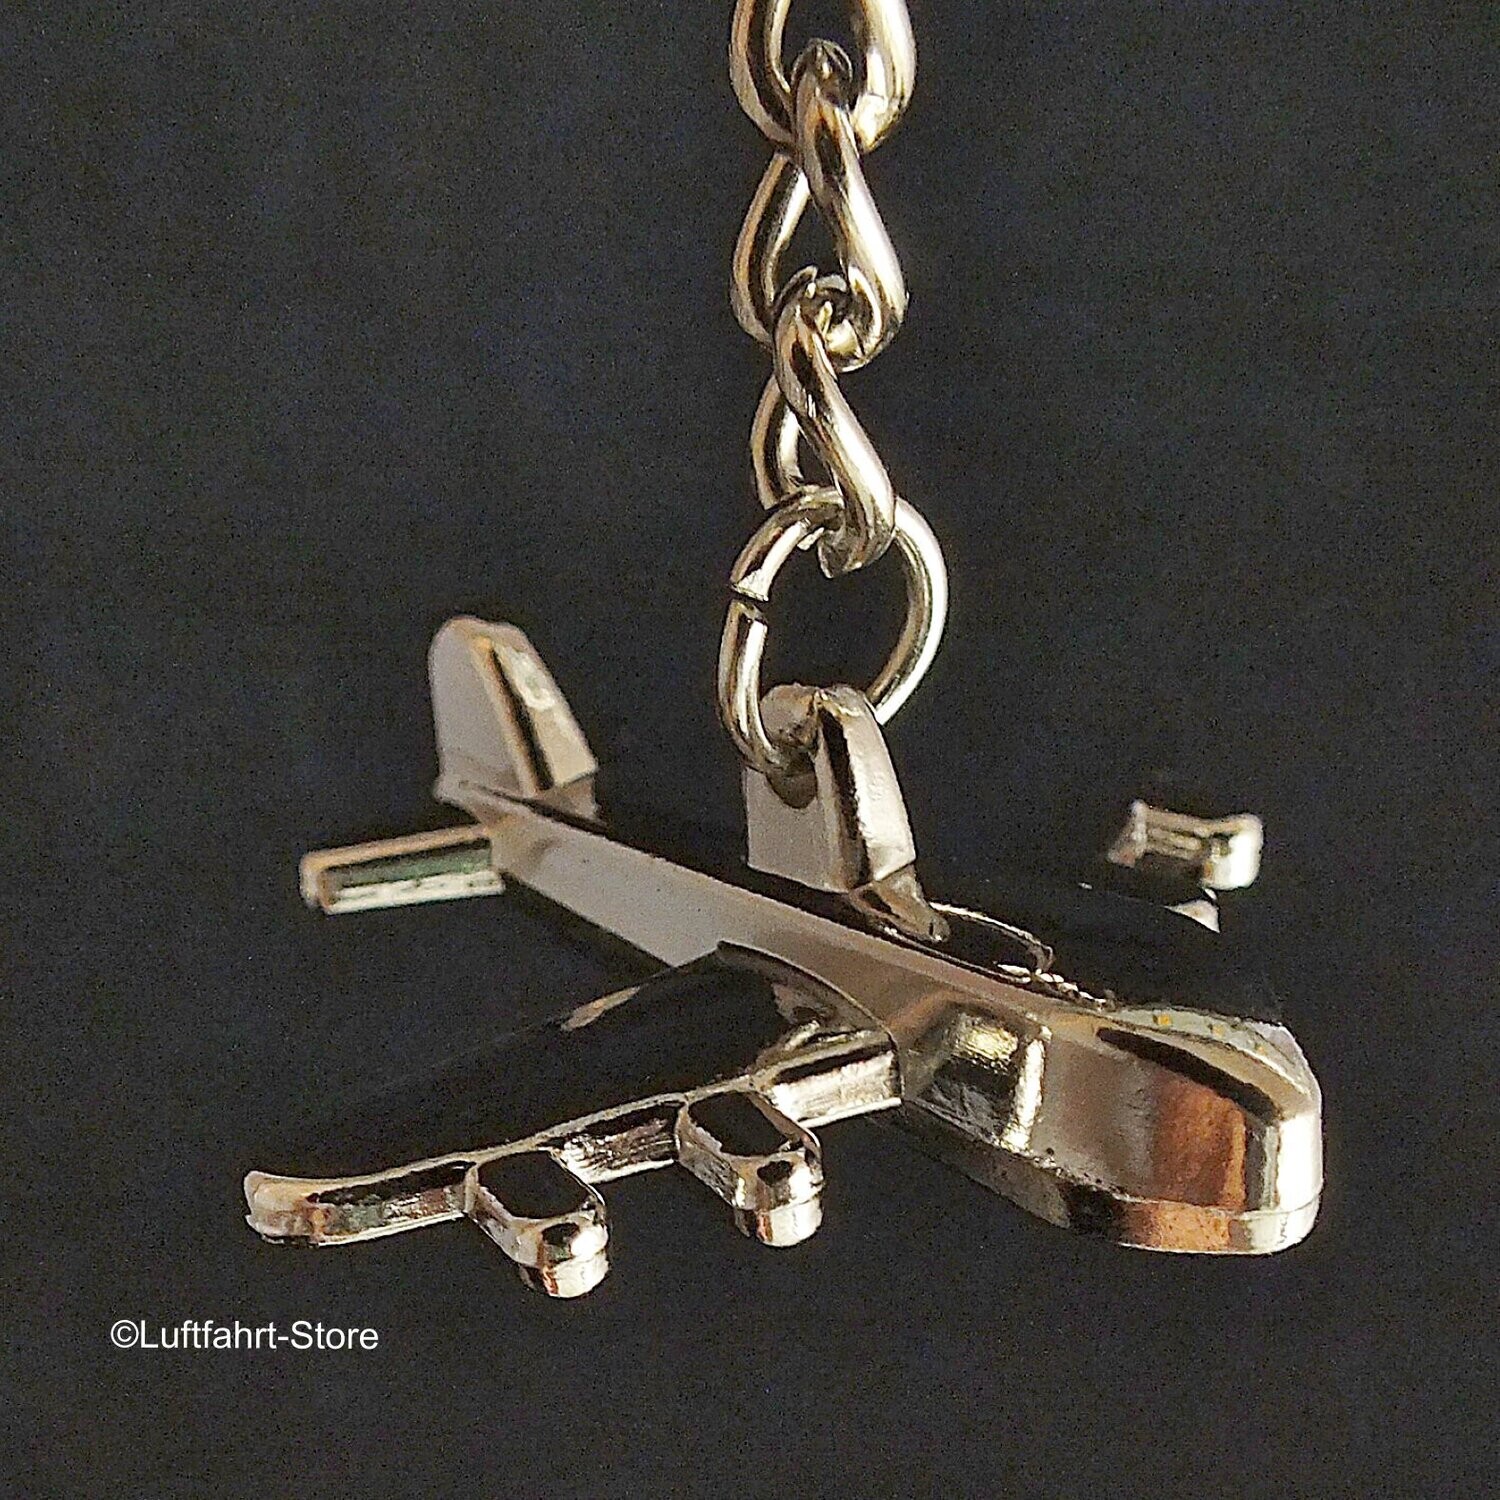 Schlüsselanhänger Flugzeug, 4-Strahlig, Metall, Chrom